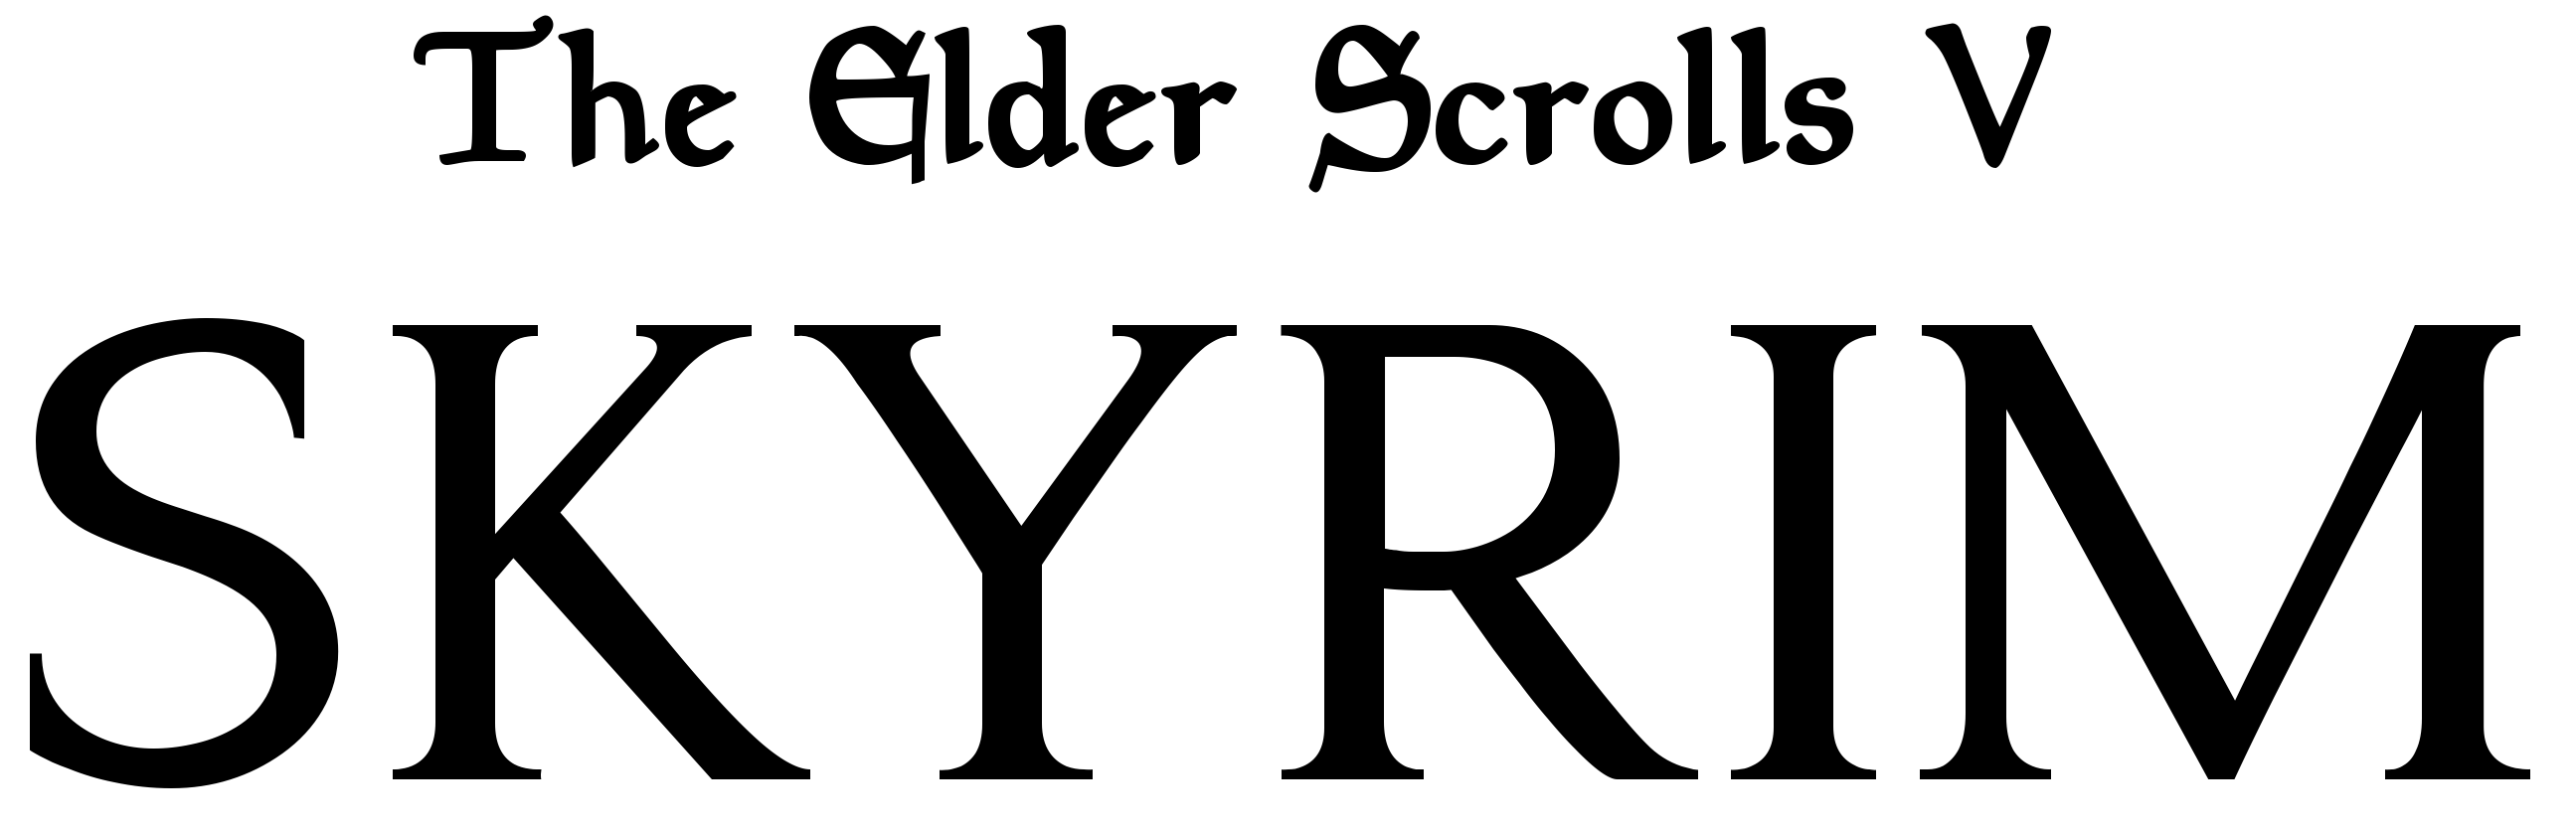 Skyrim Logo - File:The Elder Scrolls V - Skyrim logo.png - Wikimedia Commons